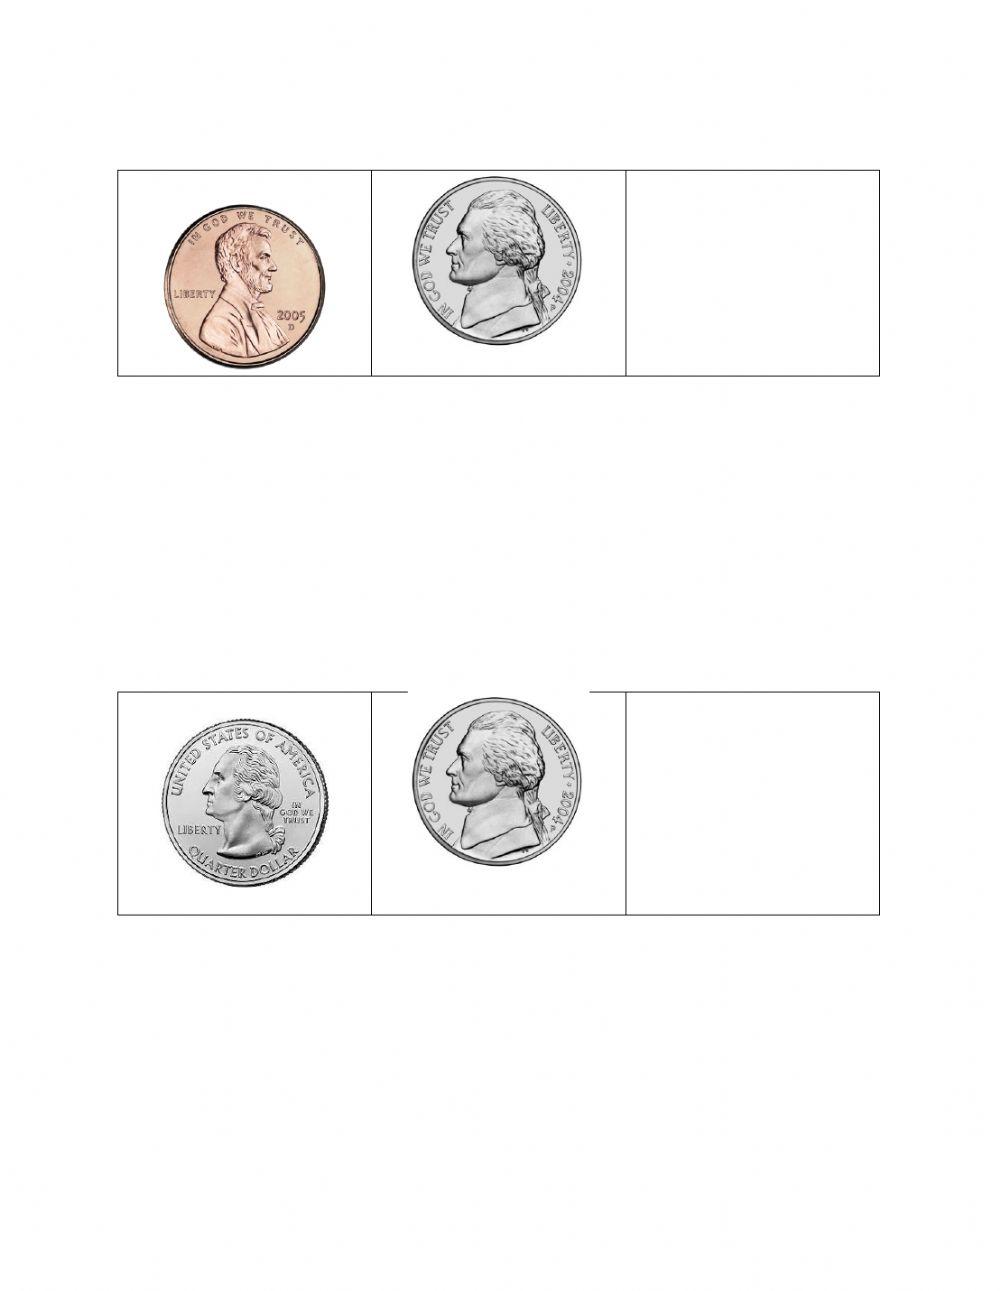 Adding Coins